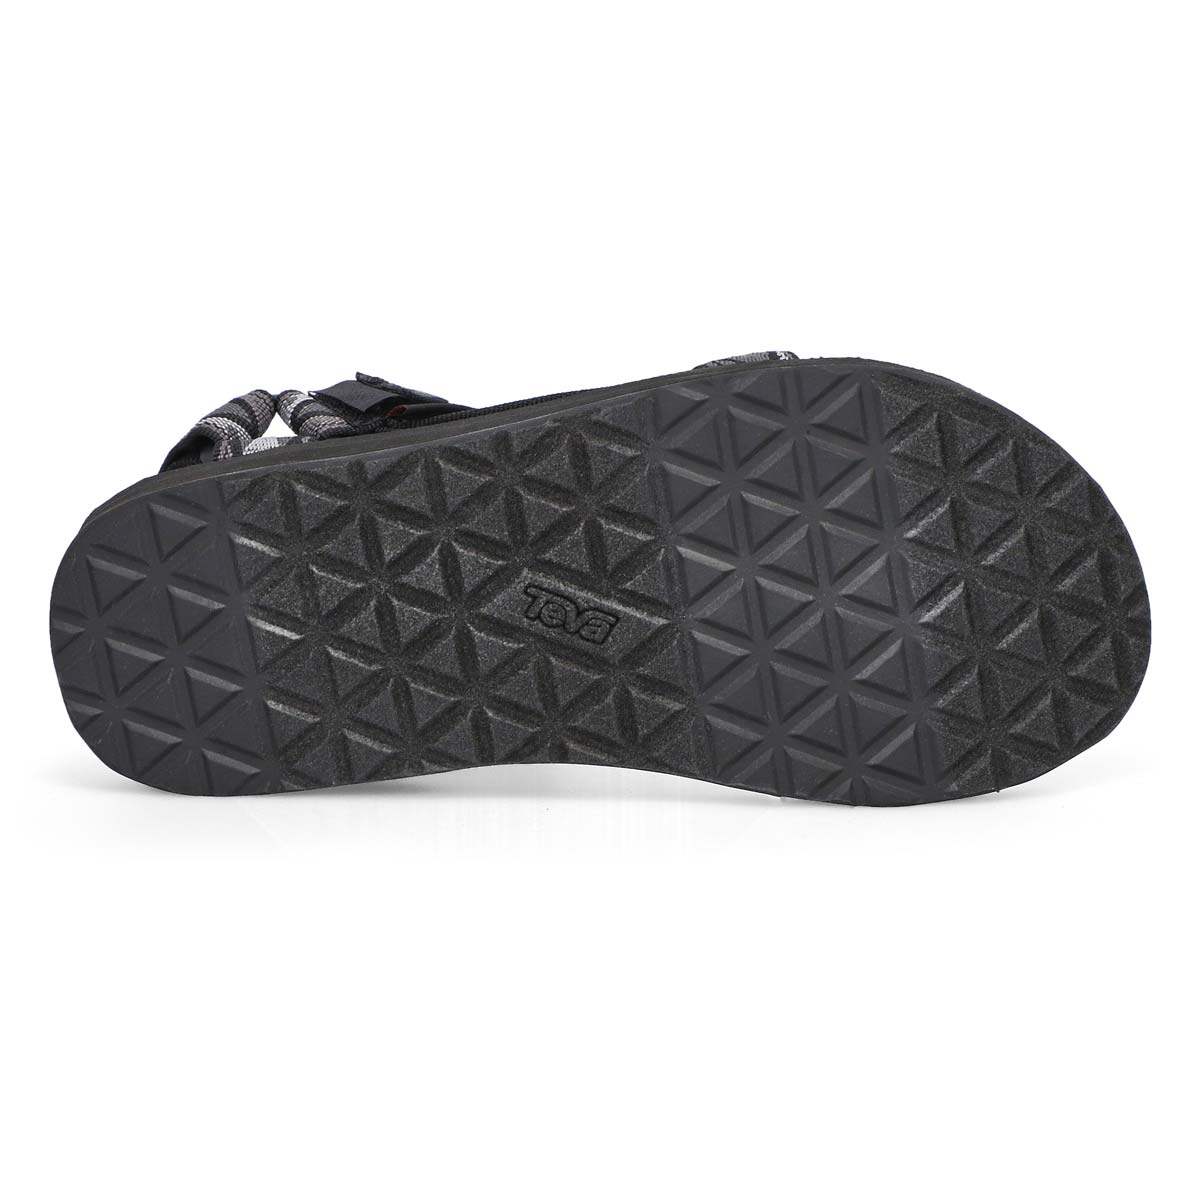 Men's Original Universal Sandal - Topanga Blk/Grey